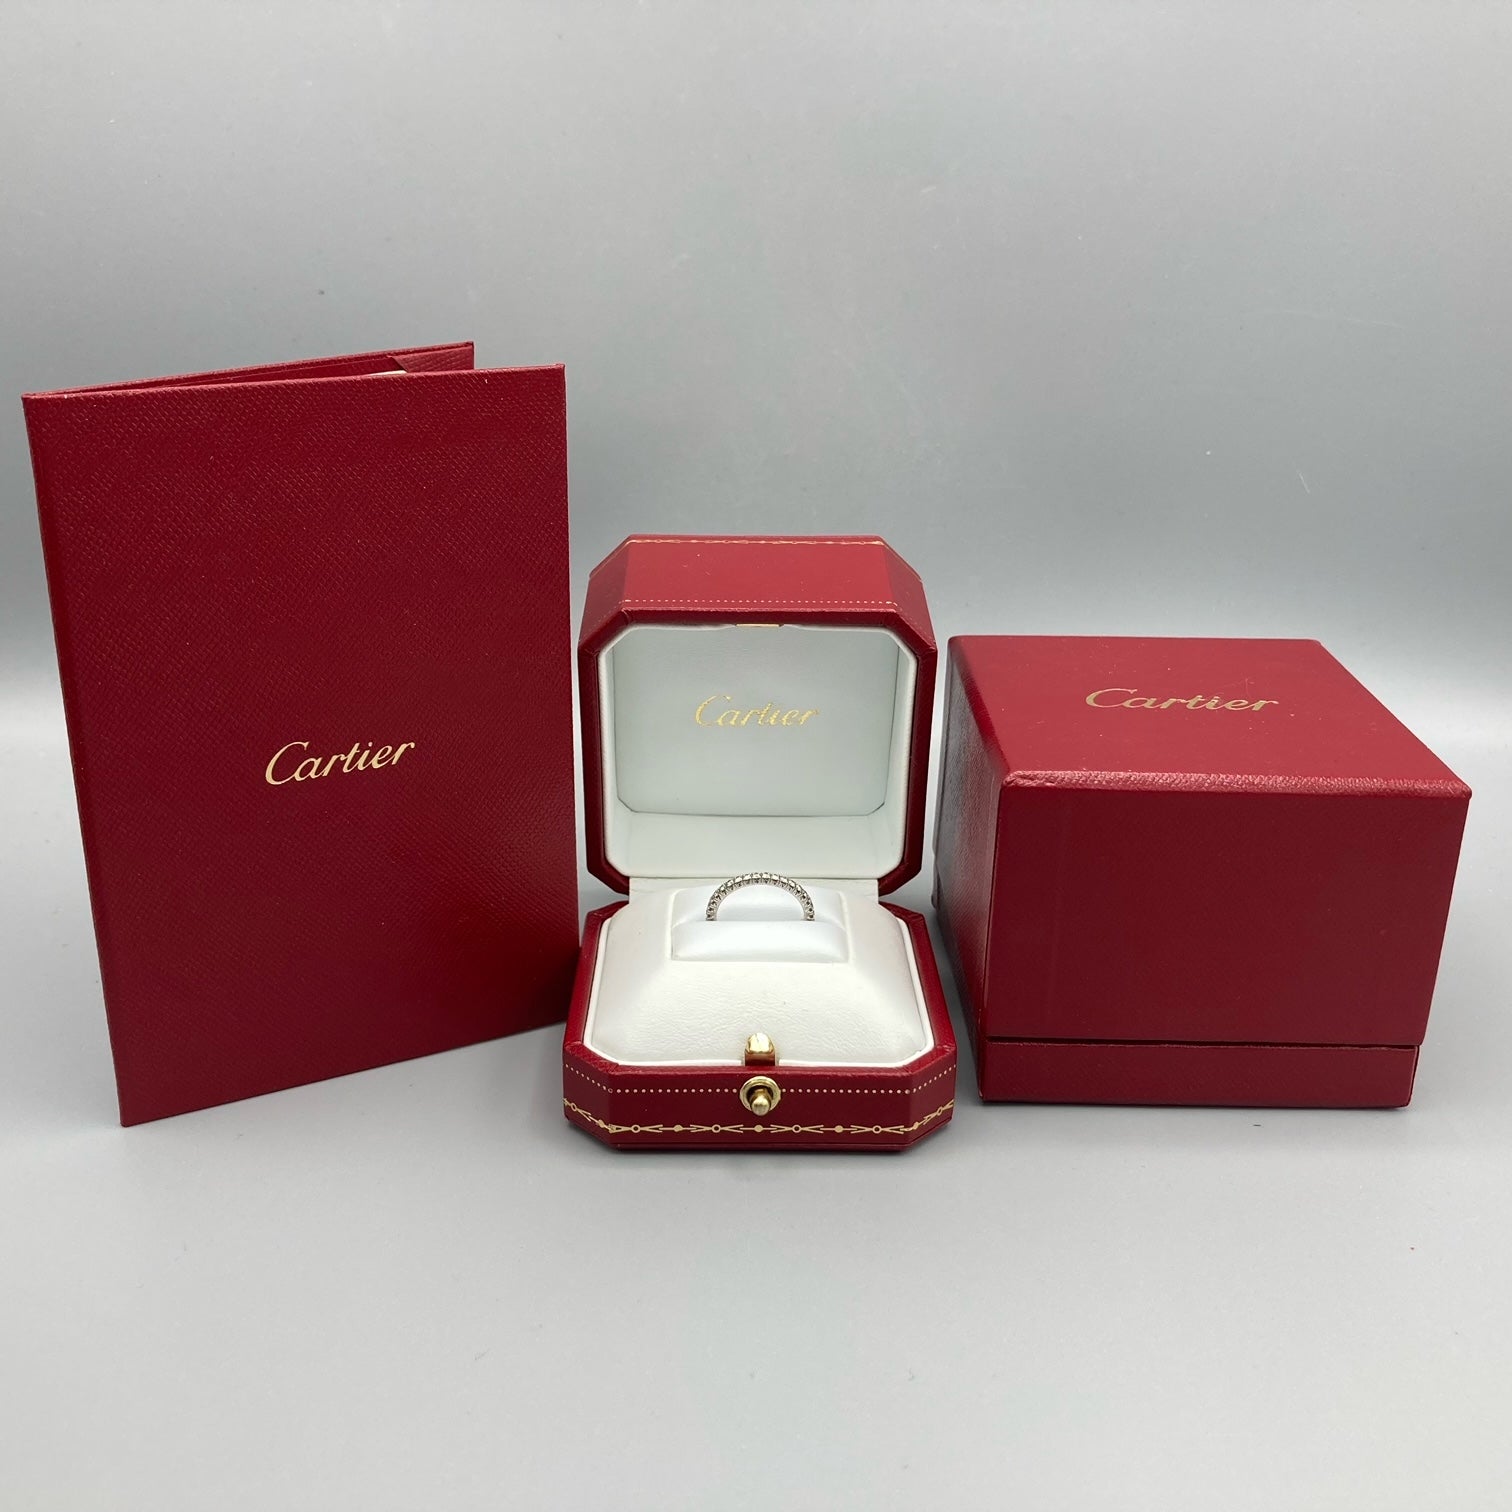 Étincelle de Cartier 18 Karat Gold Pave Diamond Eternity or Wedding Ring 49